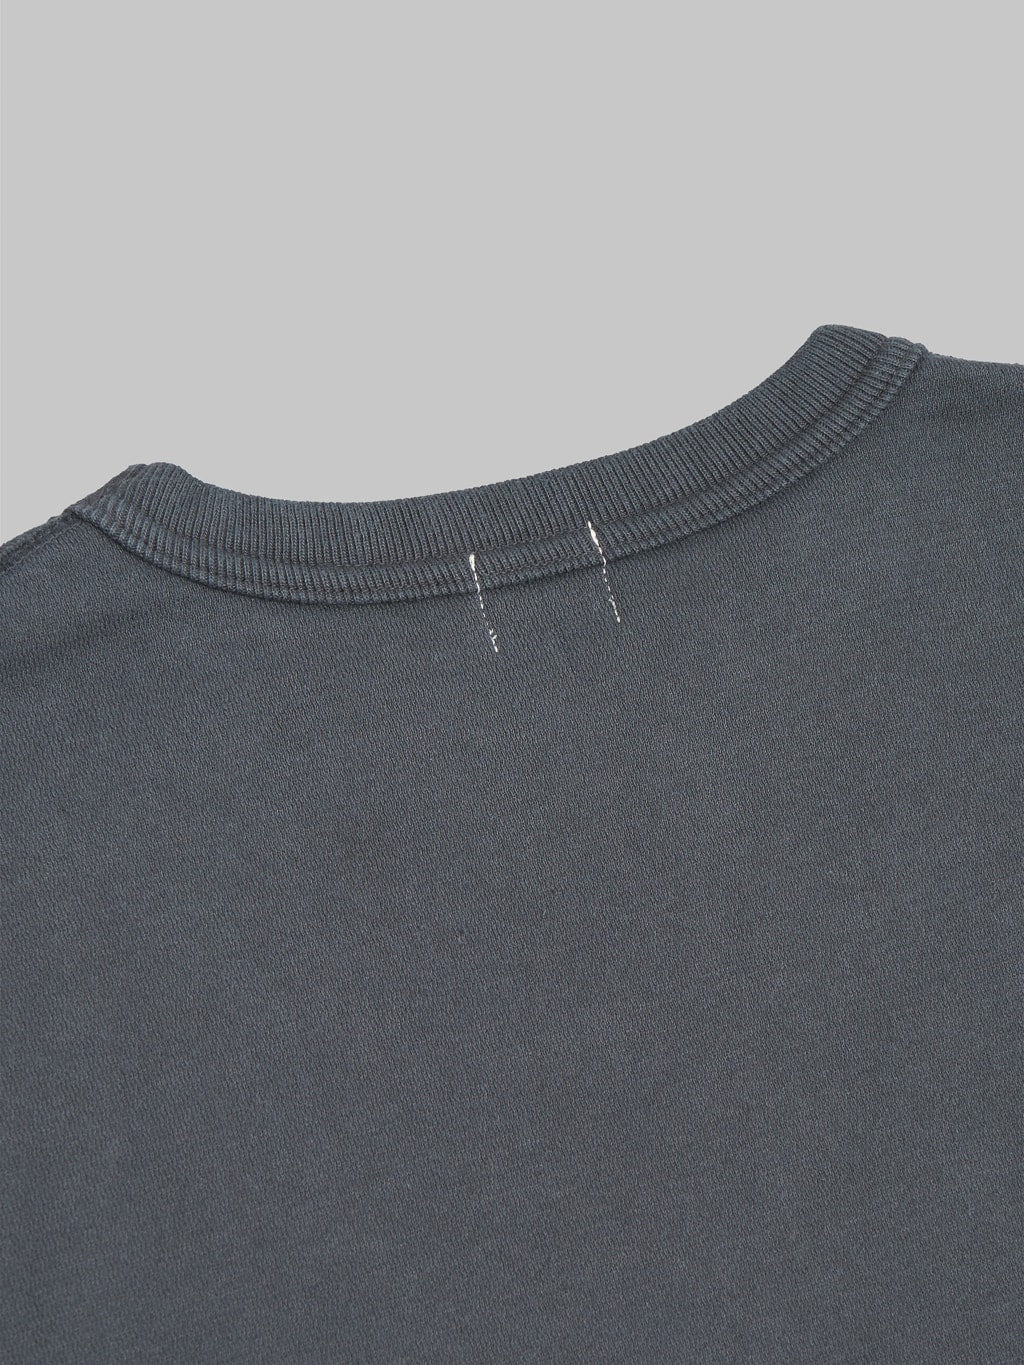 Loop Weft Vintage Pinborder Knit Crewneck Sweatshirt Antique Black cotton